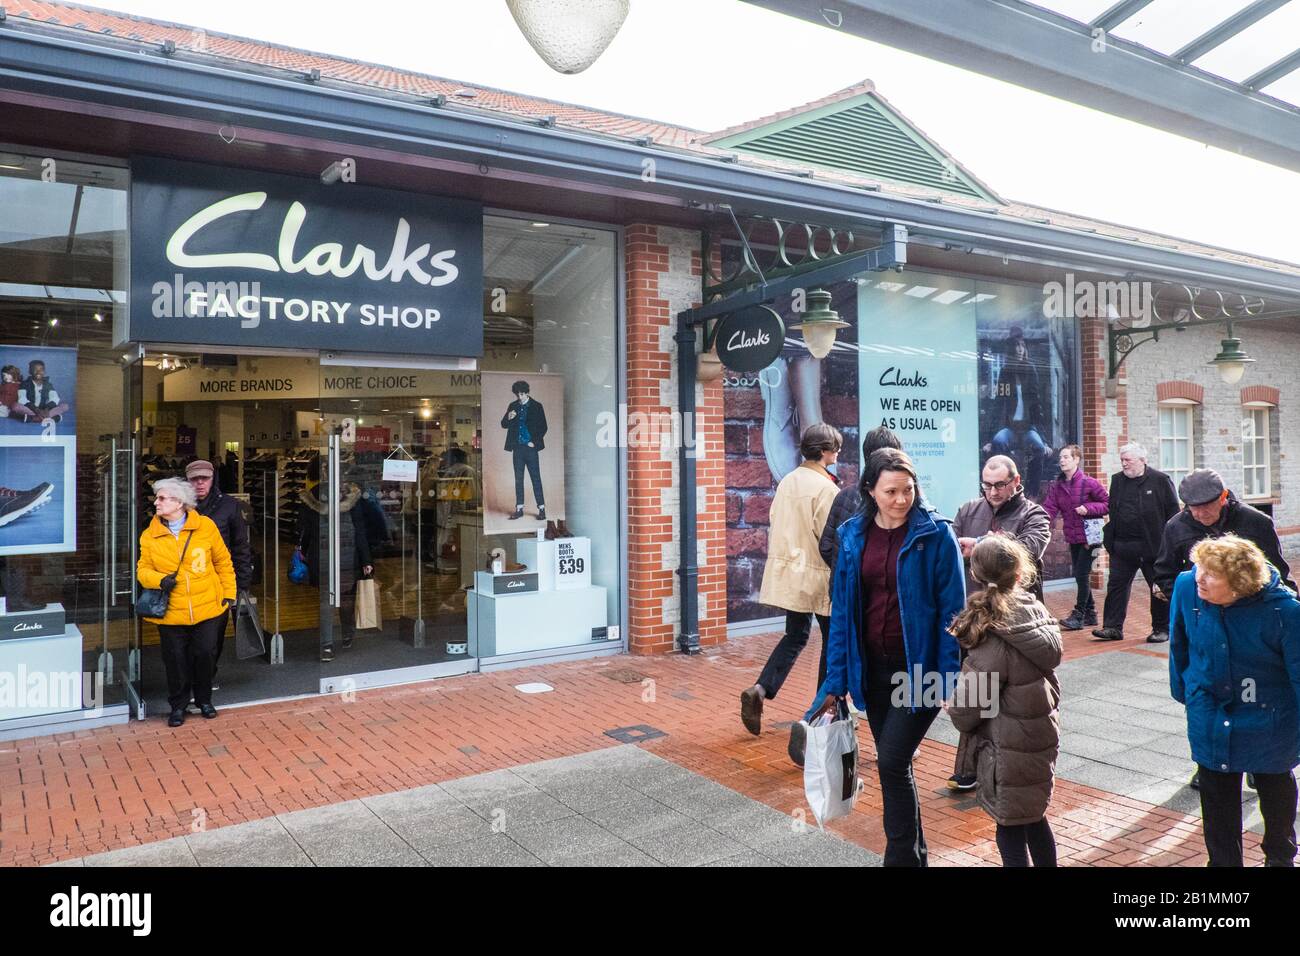 clarks factory shop online uk